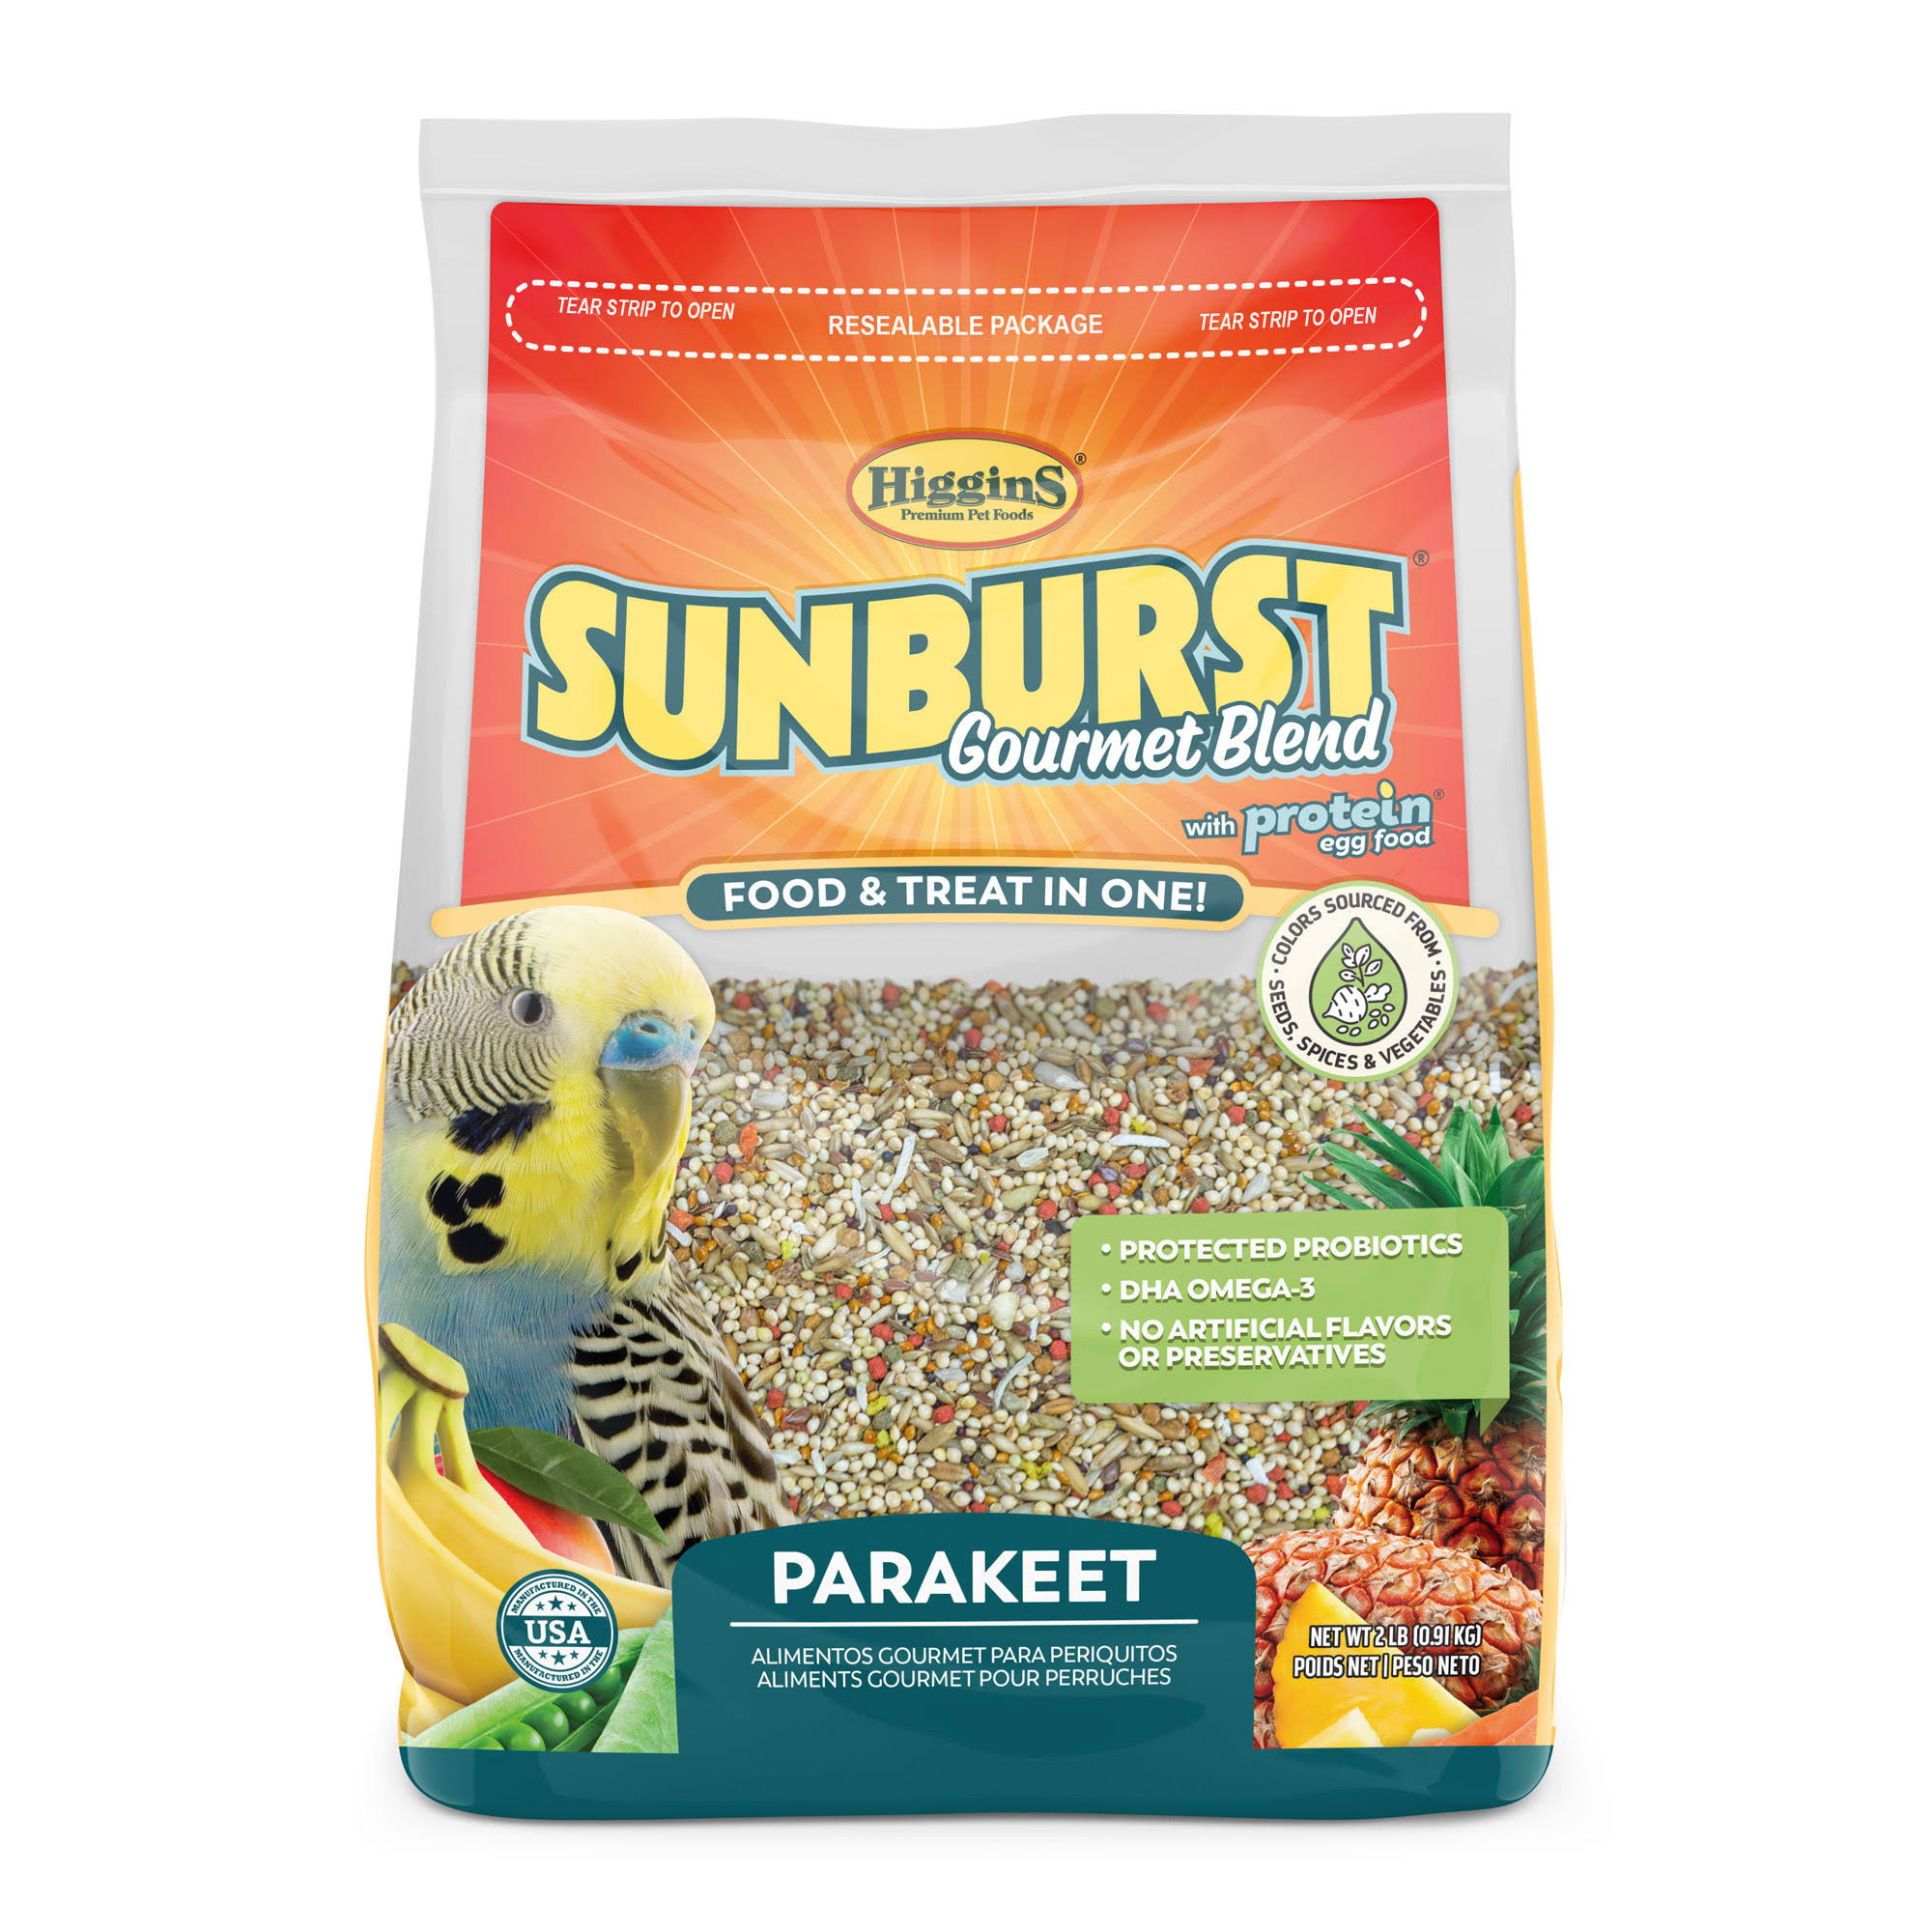 Higgins Sunburst Gourmet Food Mix for Parakeet - 2 lb